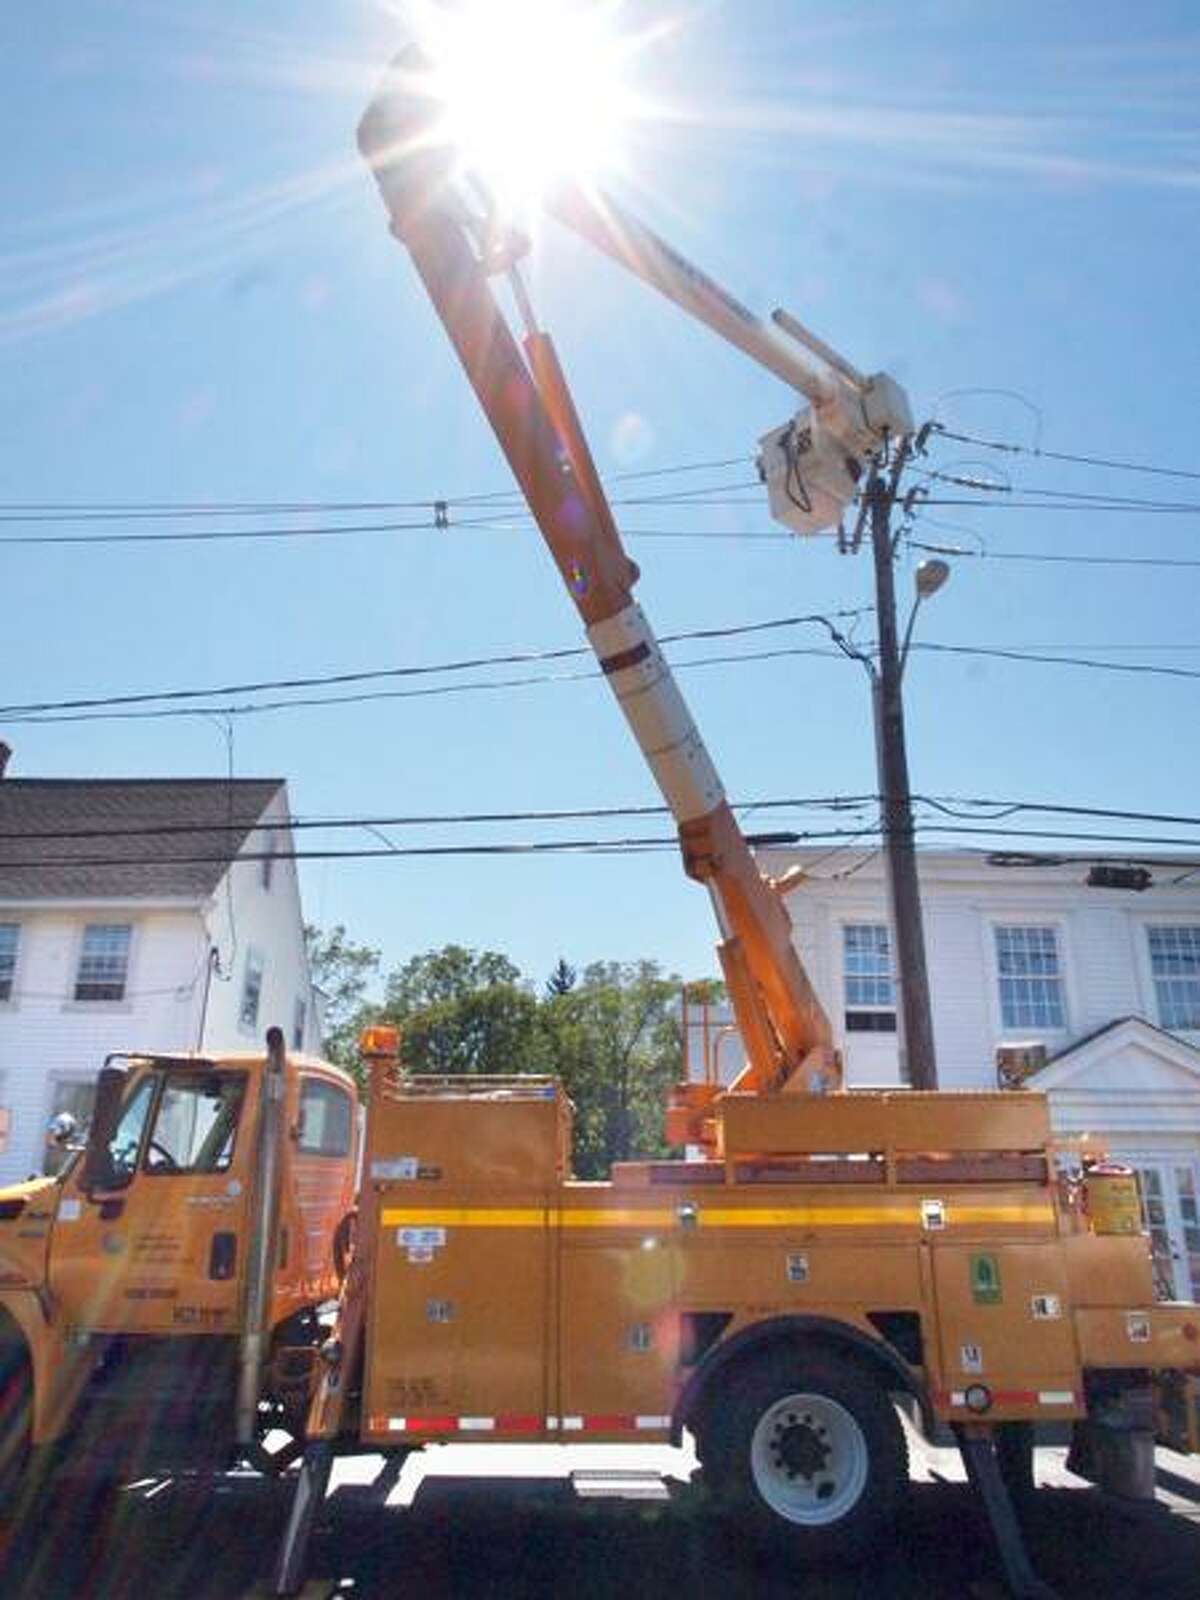 A Connecticut Light & Power crew works on power lines last week following Hurricane Irene. VM Williams/Register